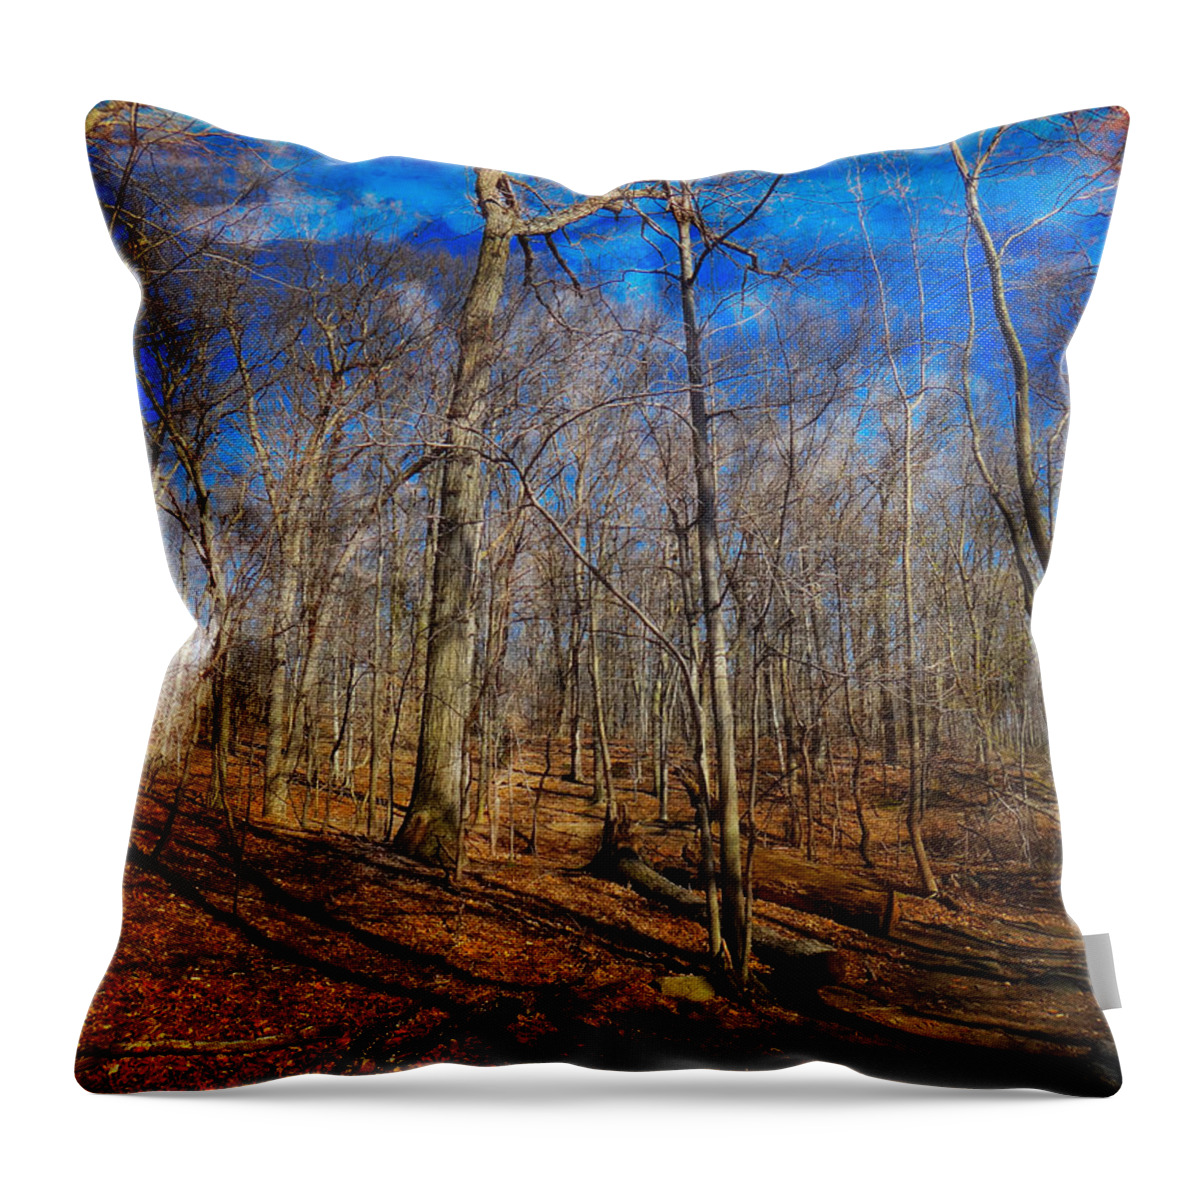 Woods Throw Pillow featuring the digital art Woods with Deep Blue Sky by Russ Considine